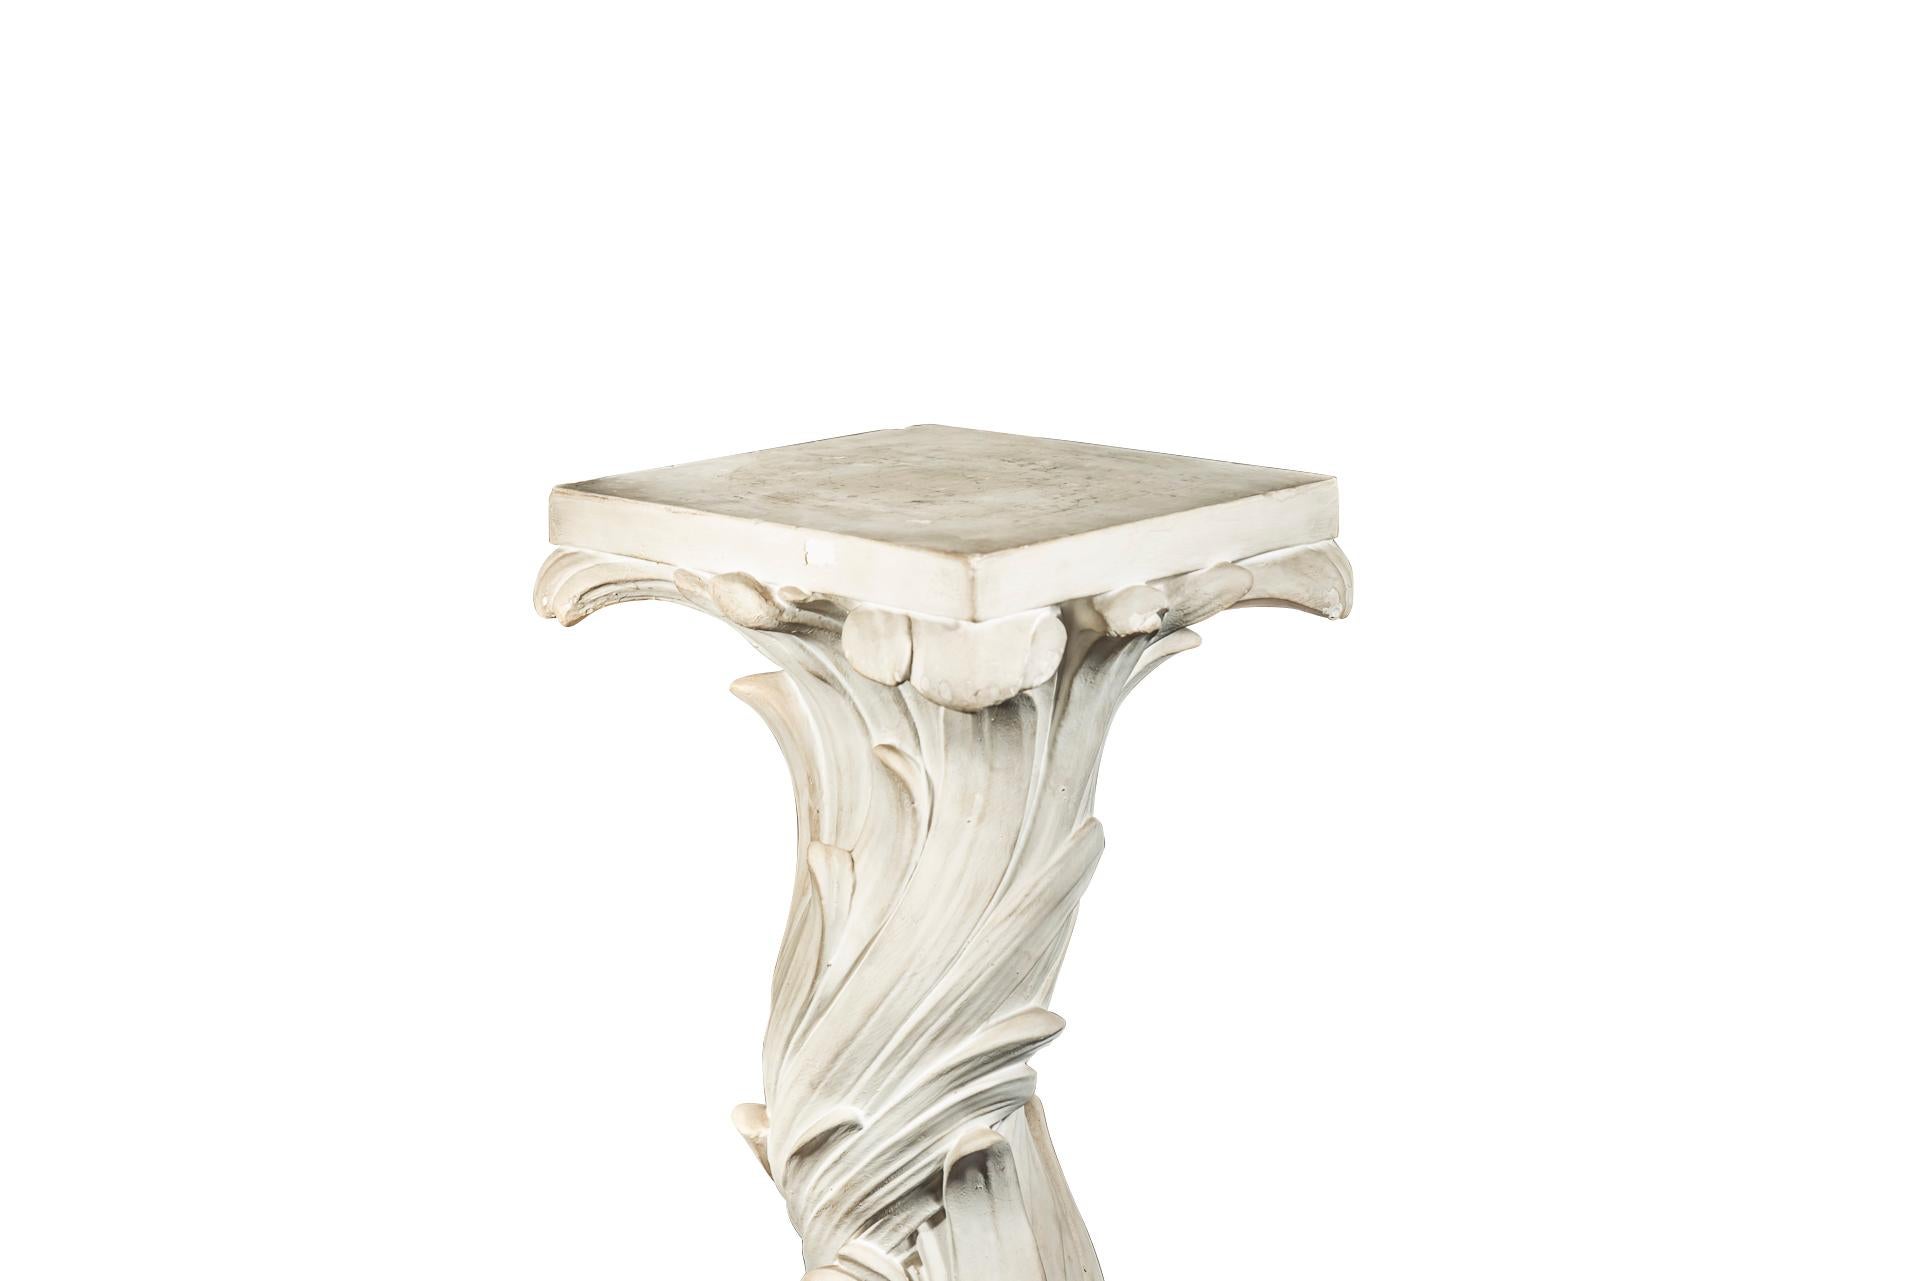 Serge Roche, (1898-1968),
Plaster column,
Original model,
Decorated in high relief vegetals,
Slight breaks and losses,
France, circa 1940.

Measures: Height 121 cm, width 33 cm, depth 33 cm.